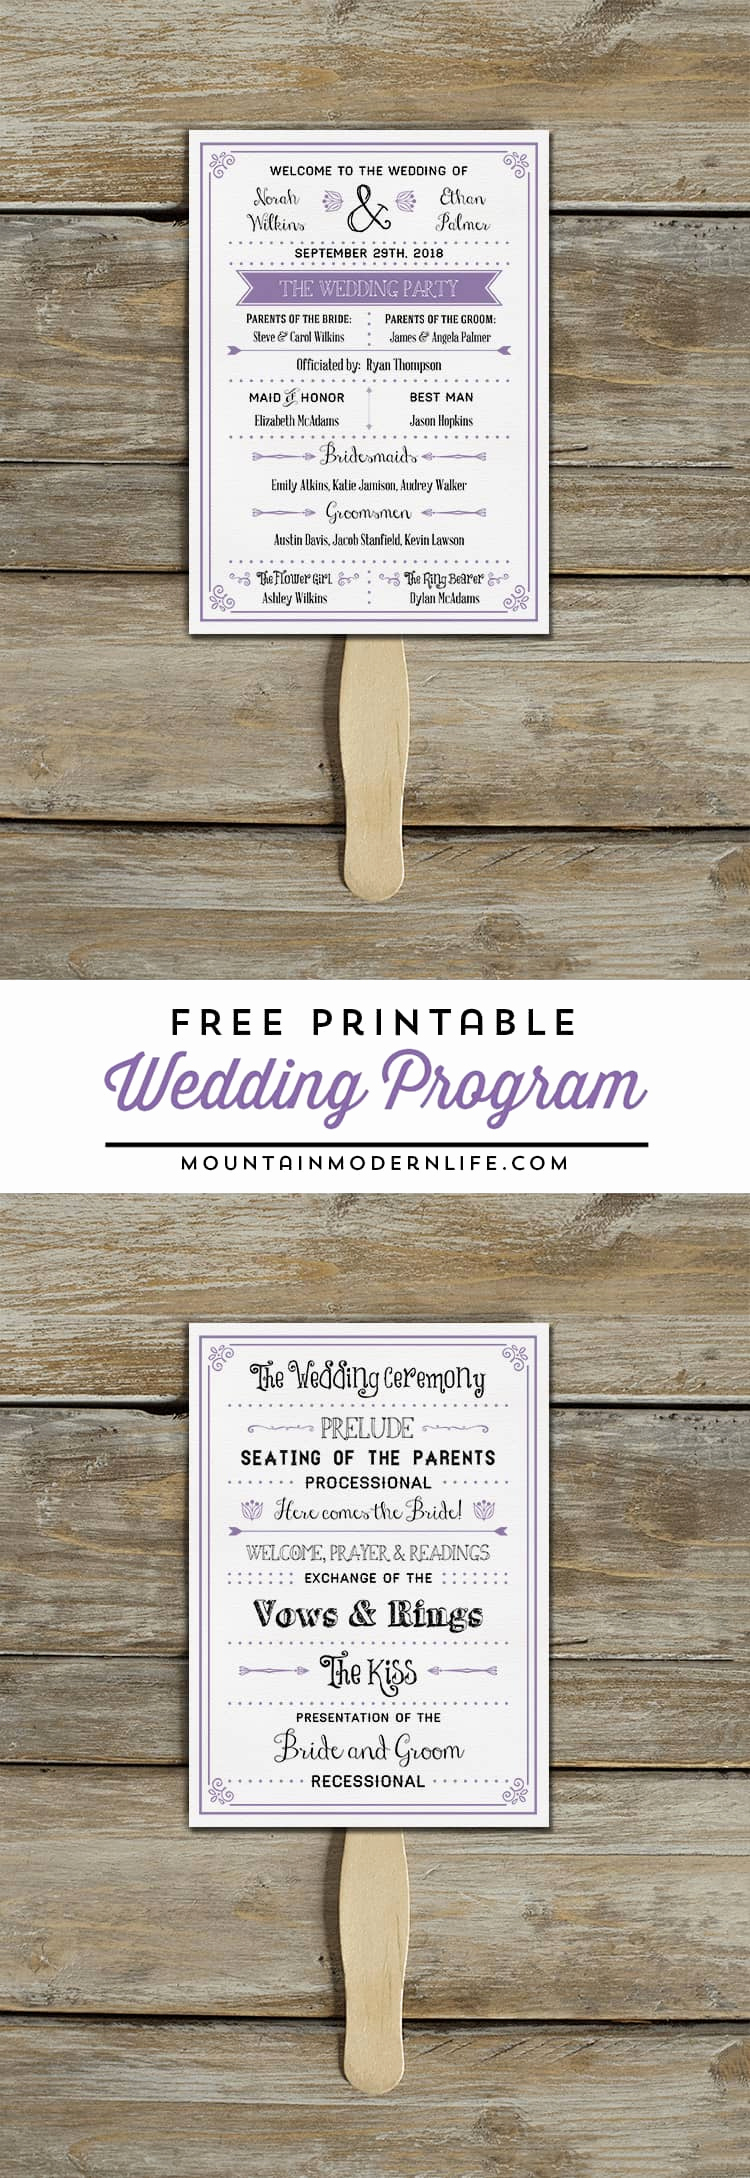 Free Wedding Program Template Fresh Free Printable Wedding Program